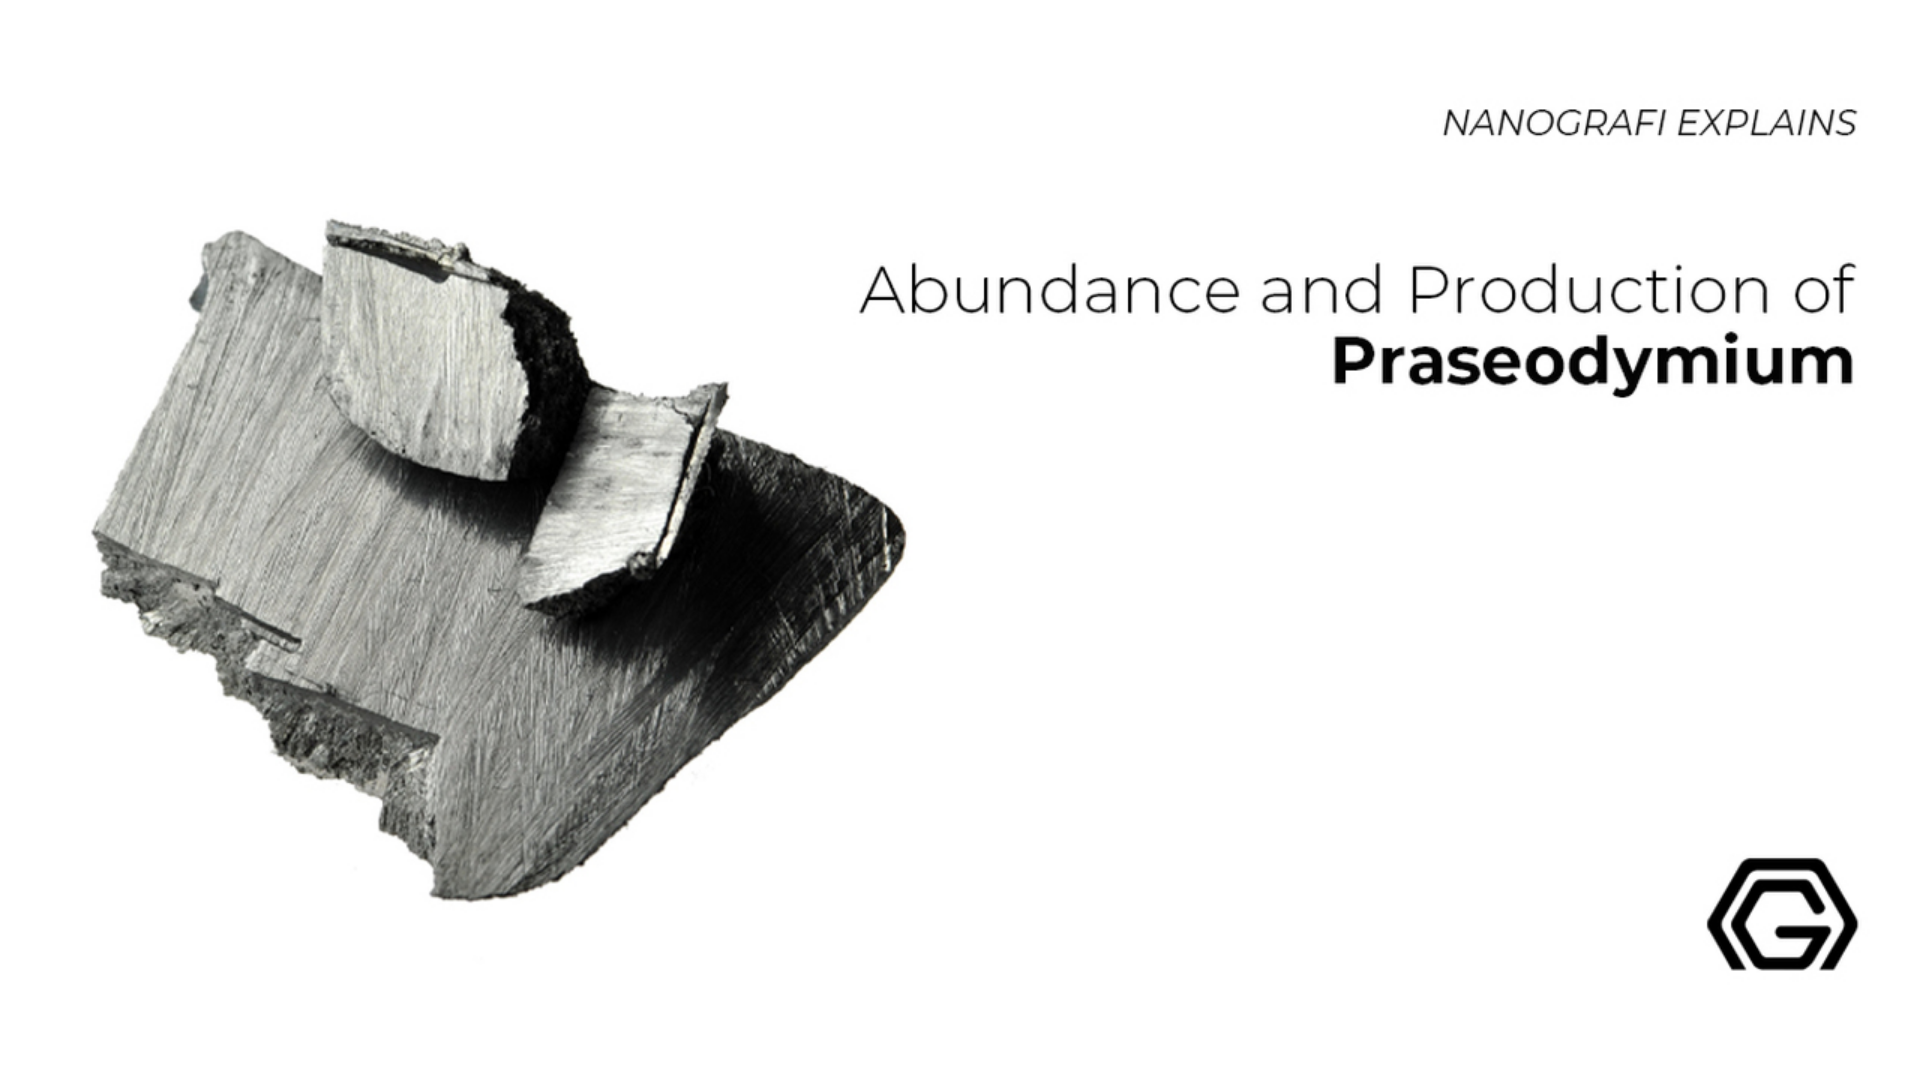 Abundance and production of praseodymium